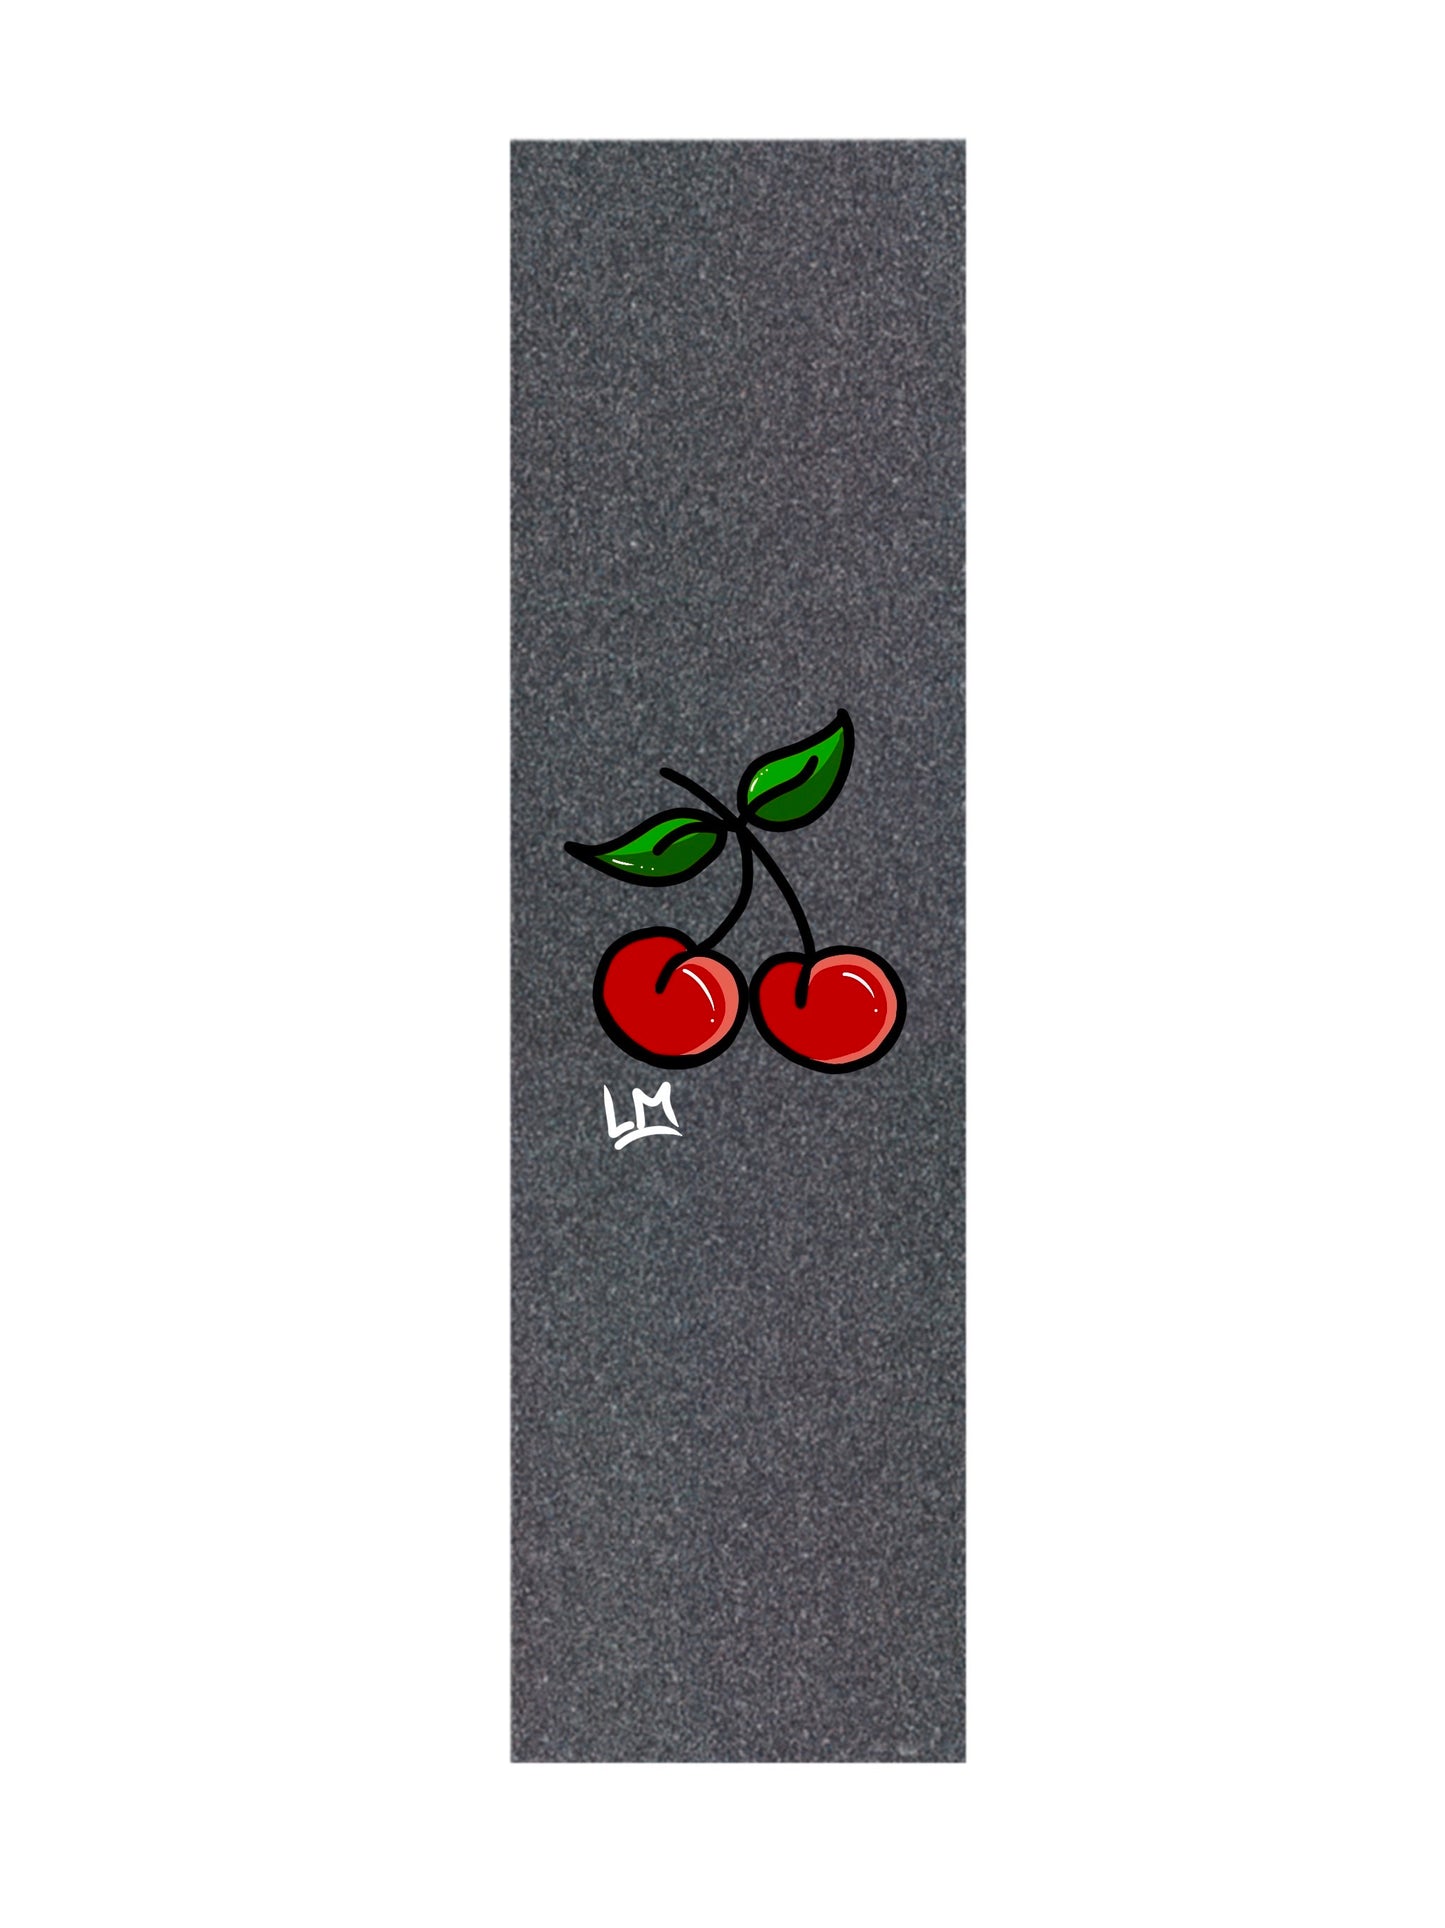 Cherry LM Grip Art